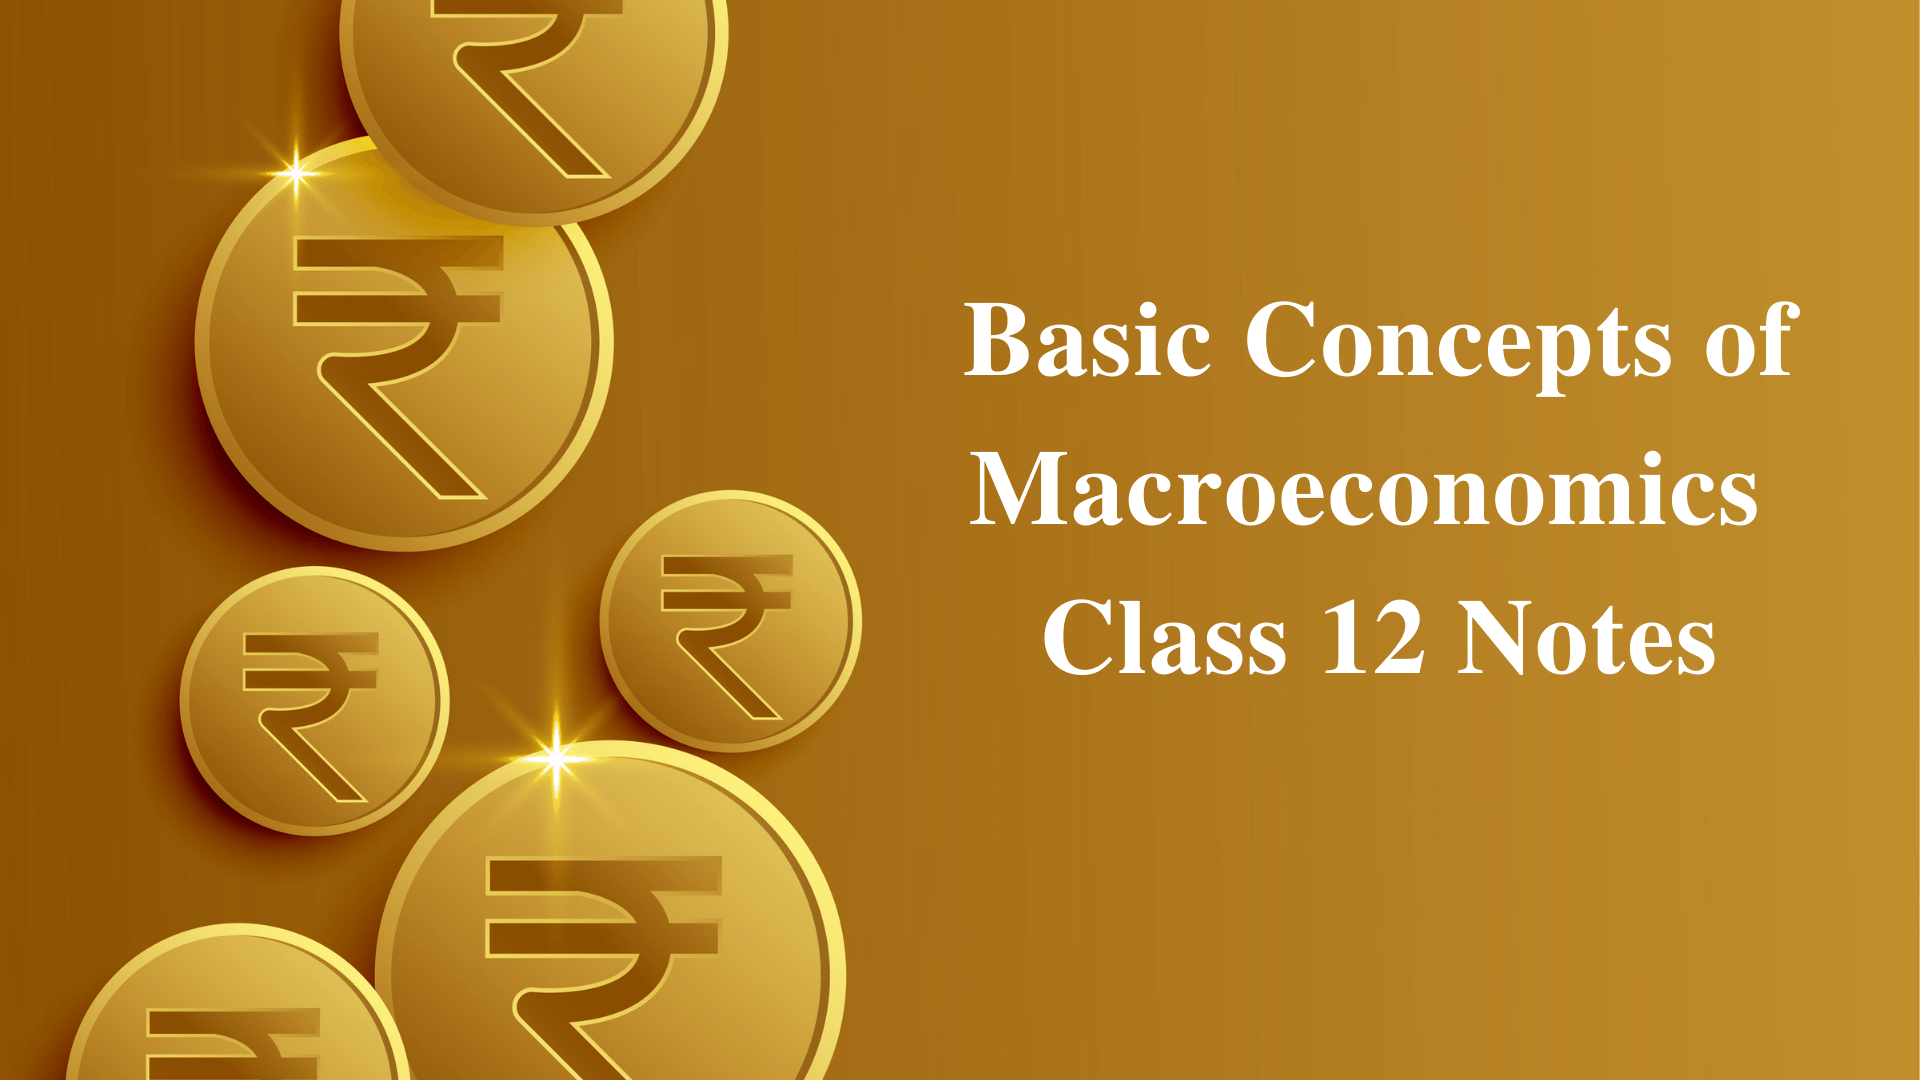 Basic Concepts of Macroeconomics Class 12 Notes